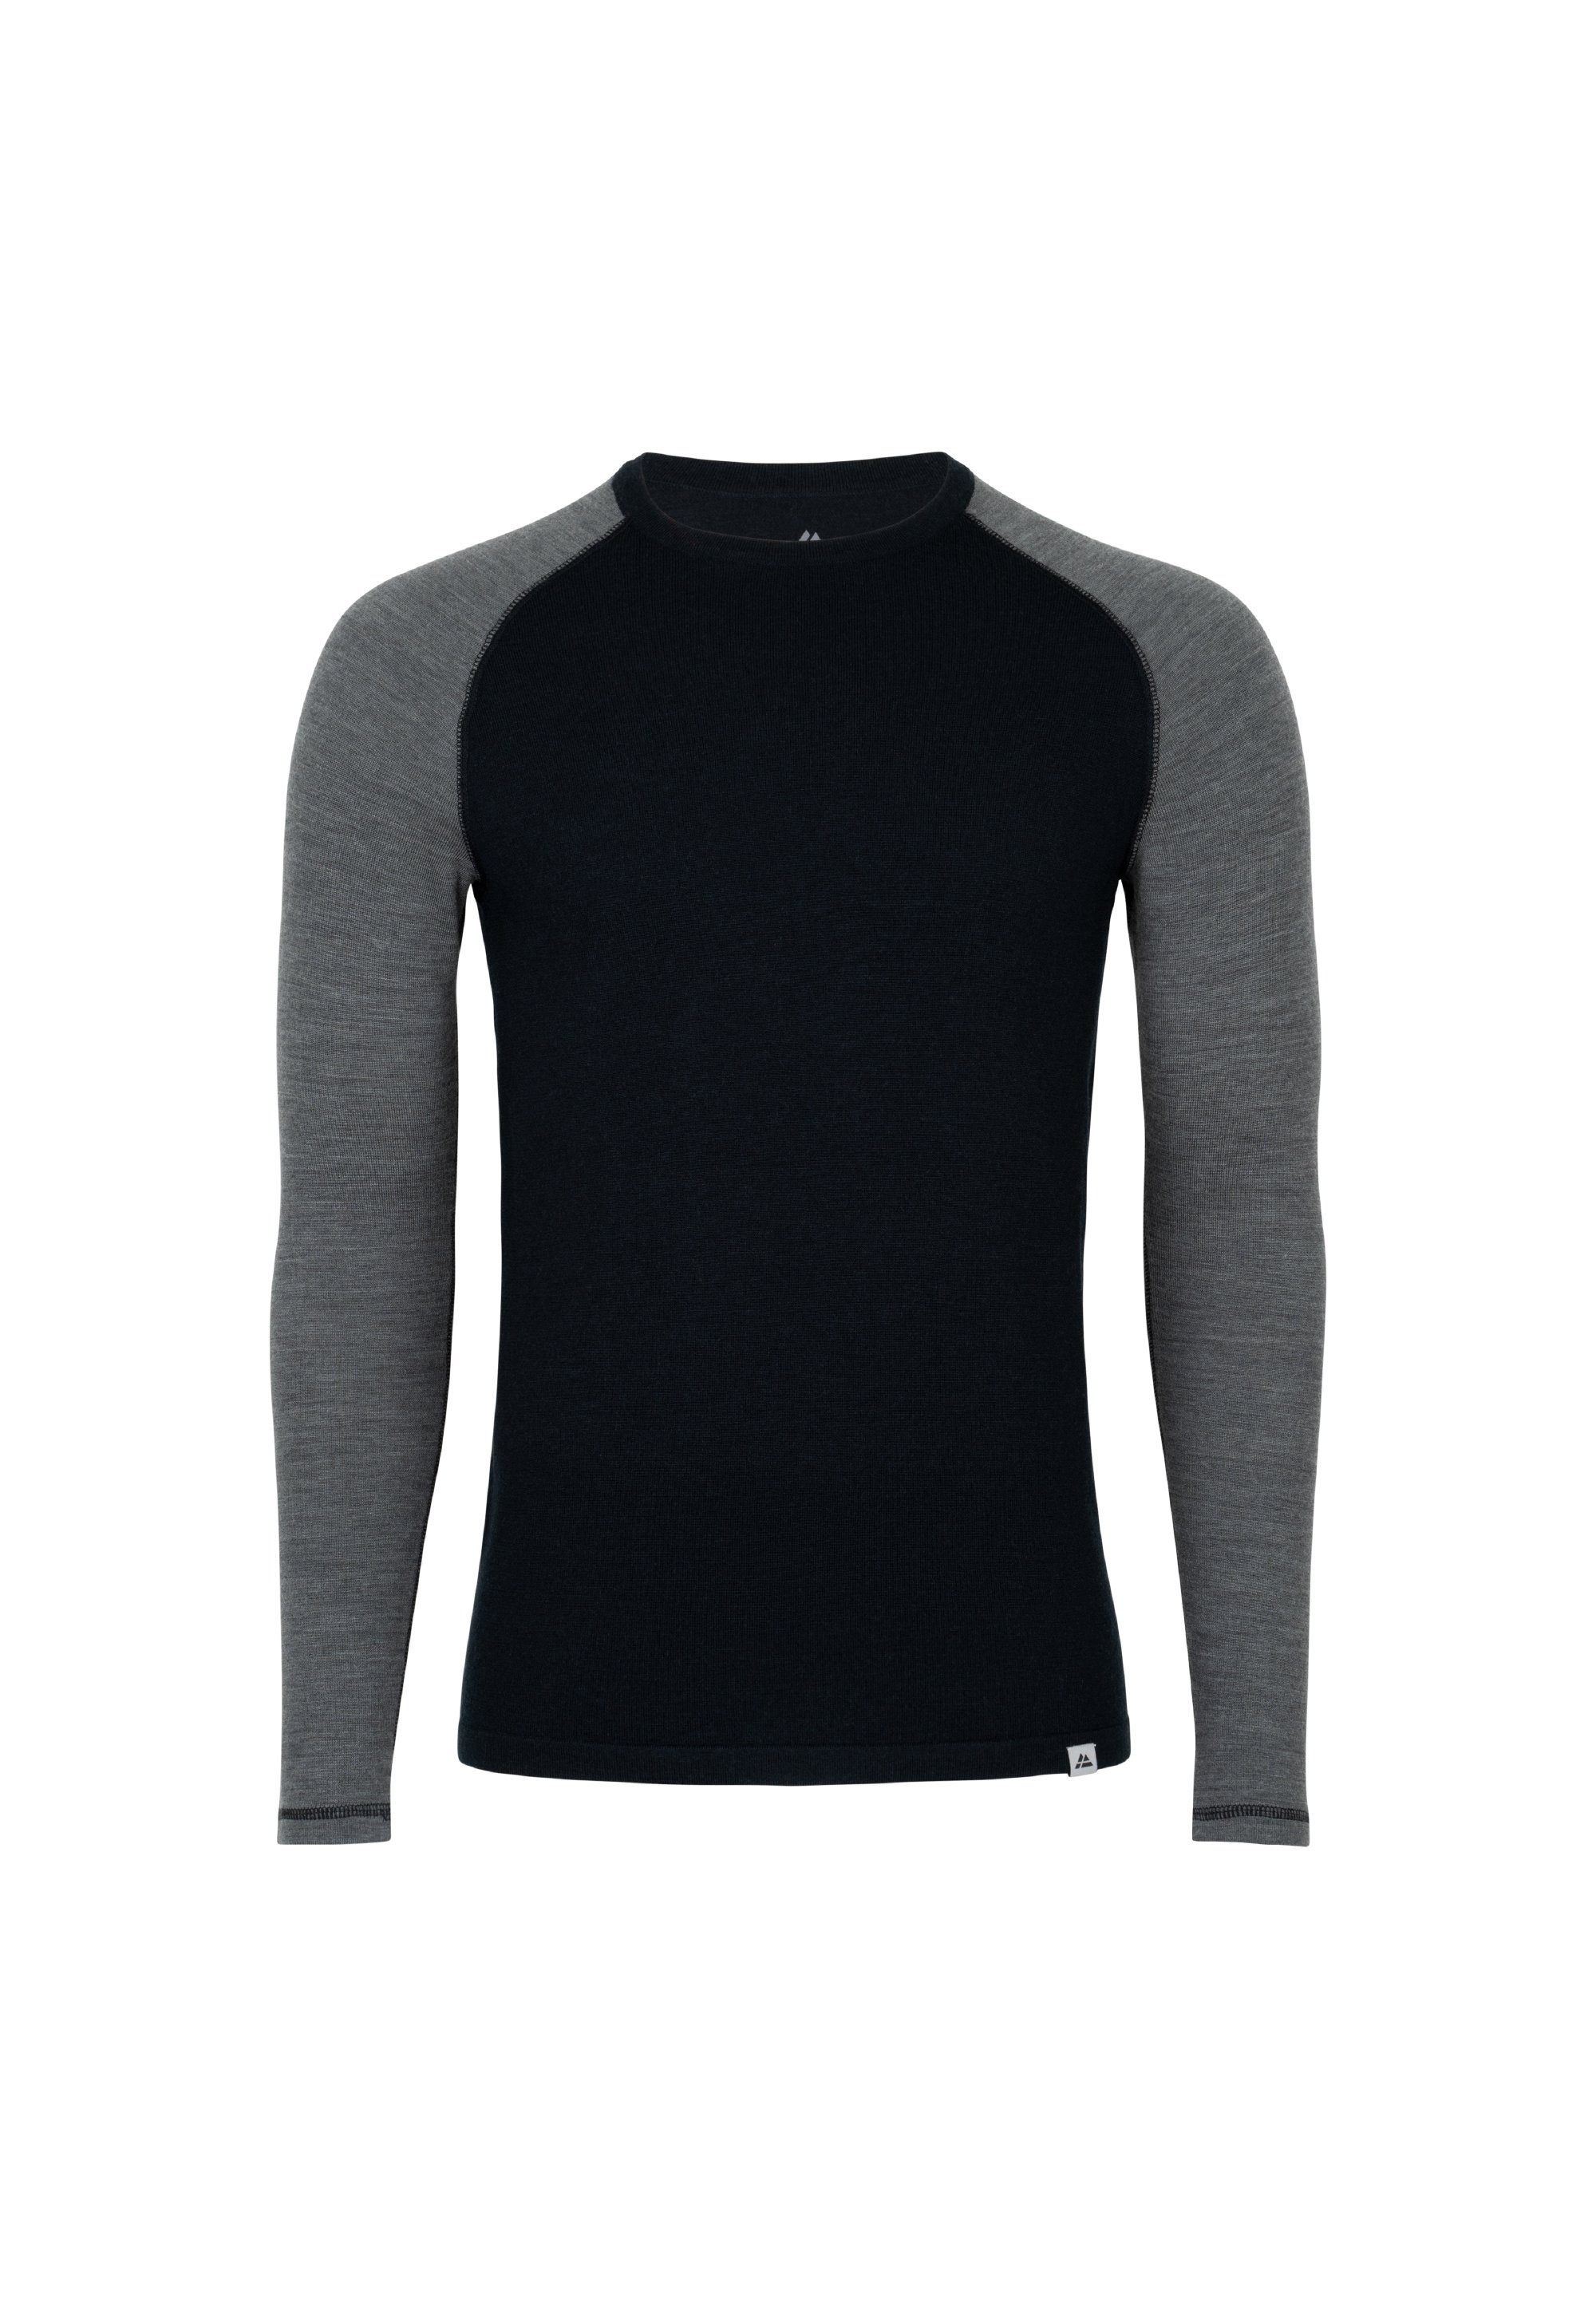 Temperaturregulierend DANISH black/dark grey Funktionsshirt ENDURANCE Herren Thermounterhemd Merino